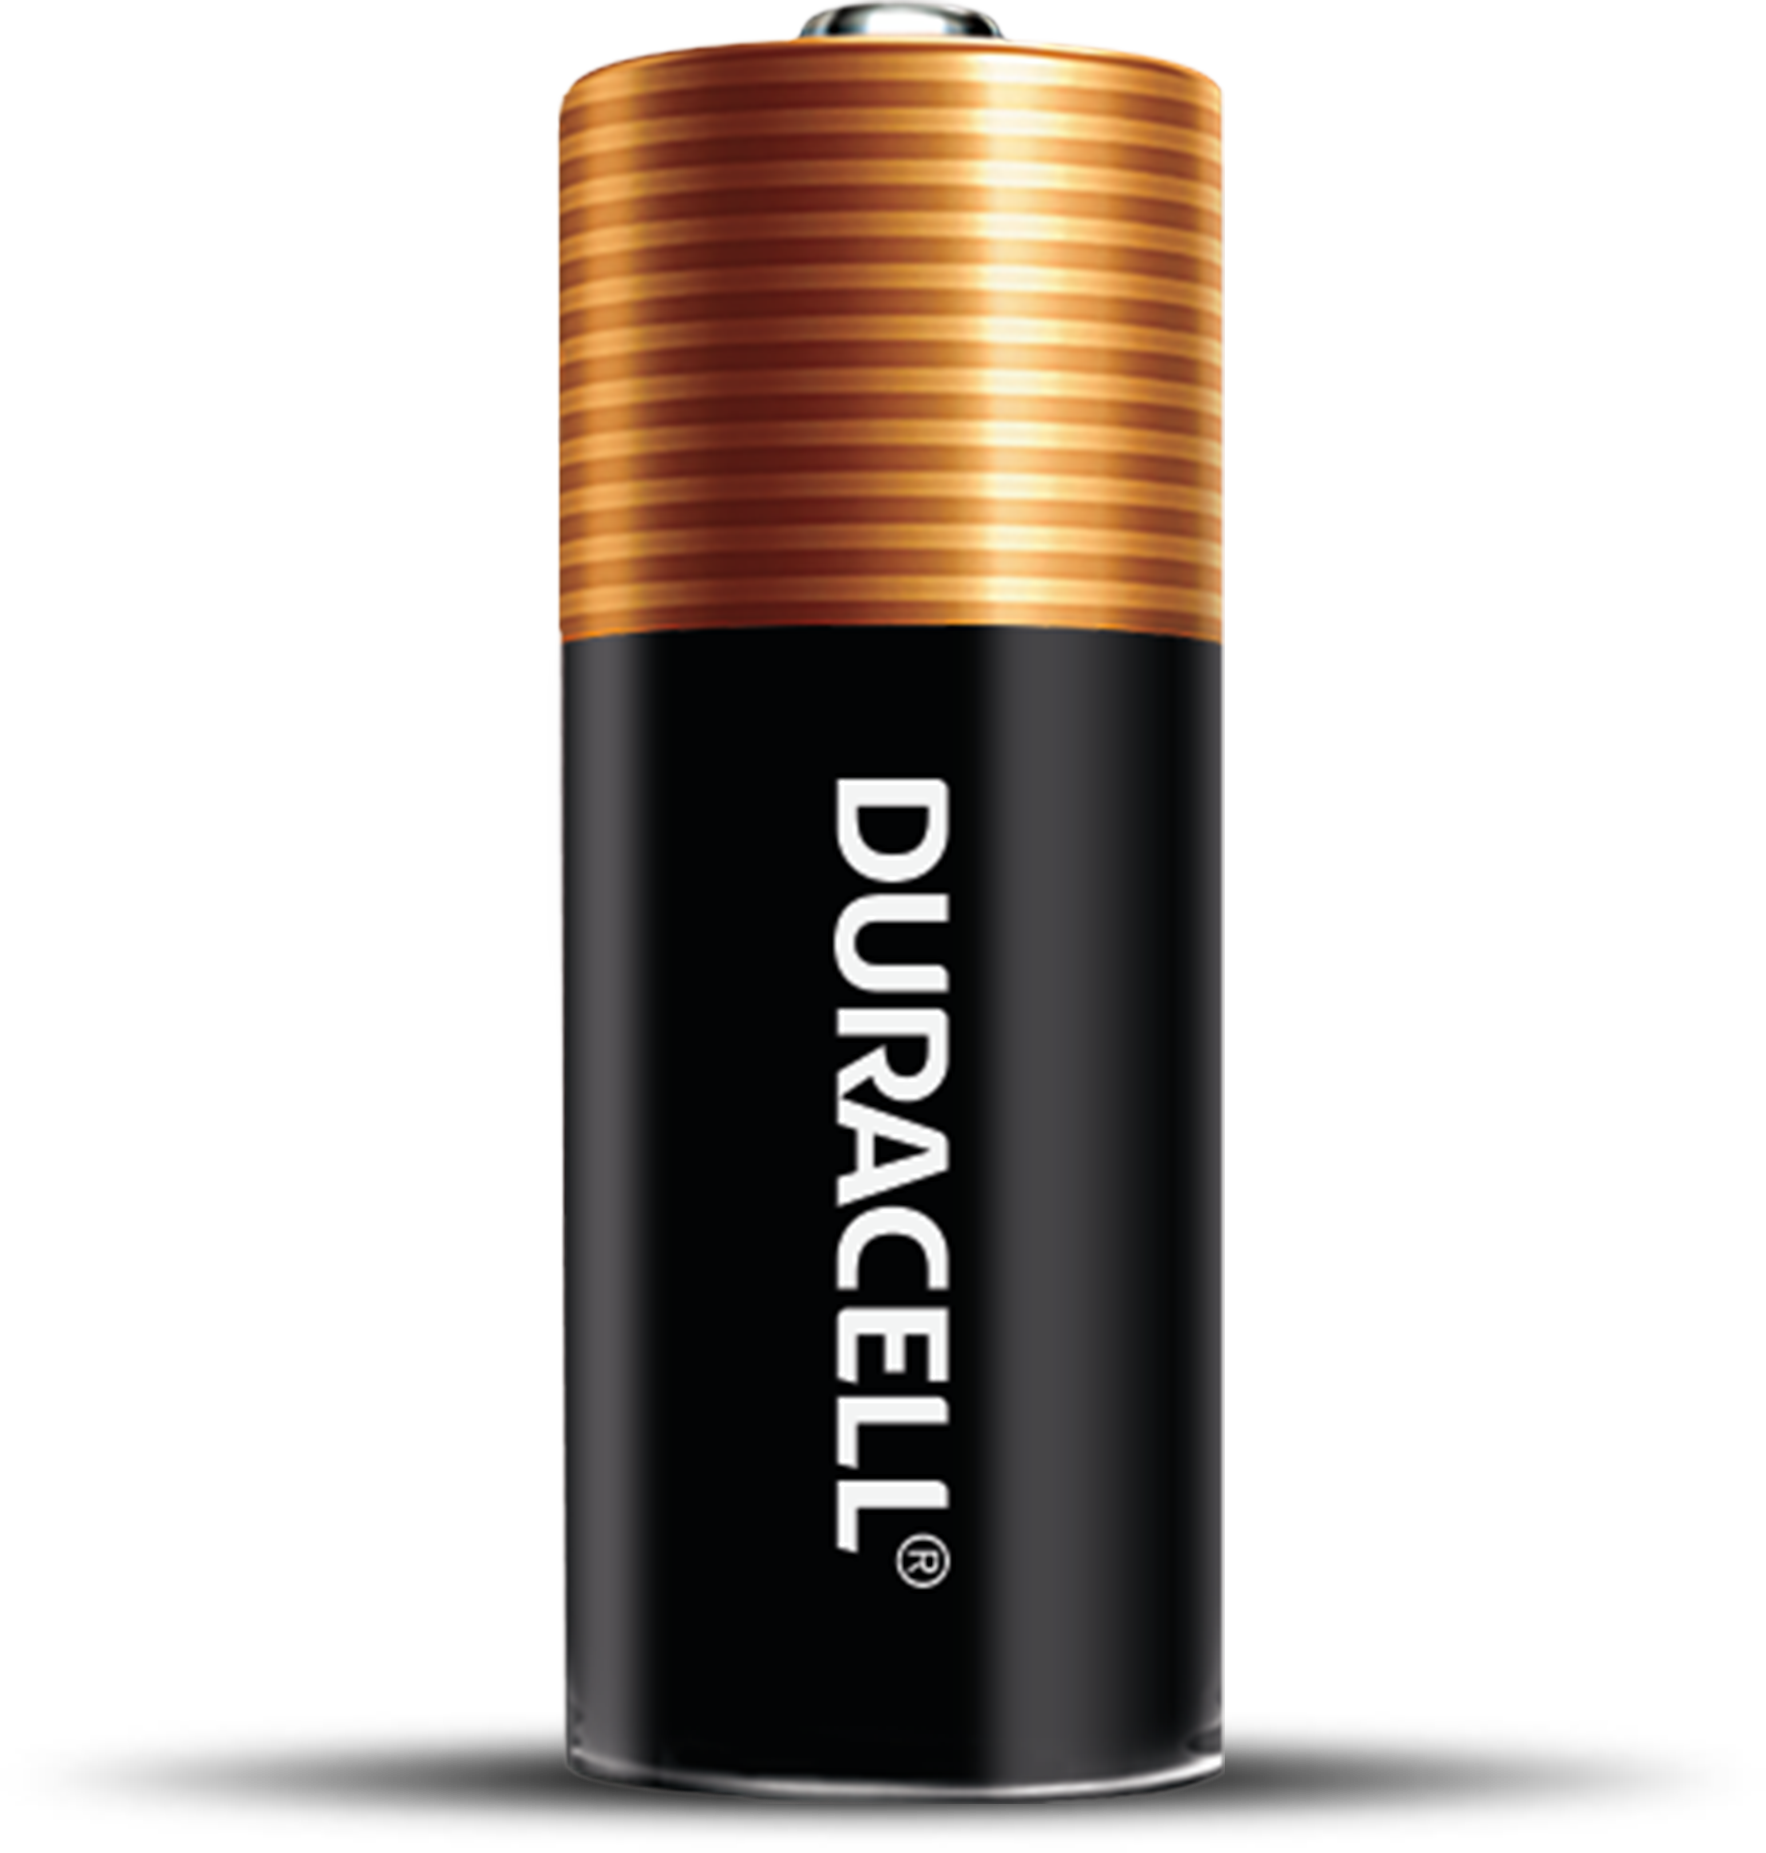 Duracell Ultra Photo AAAA batería, 2/CT